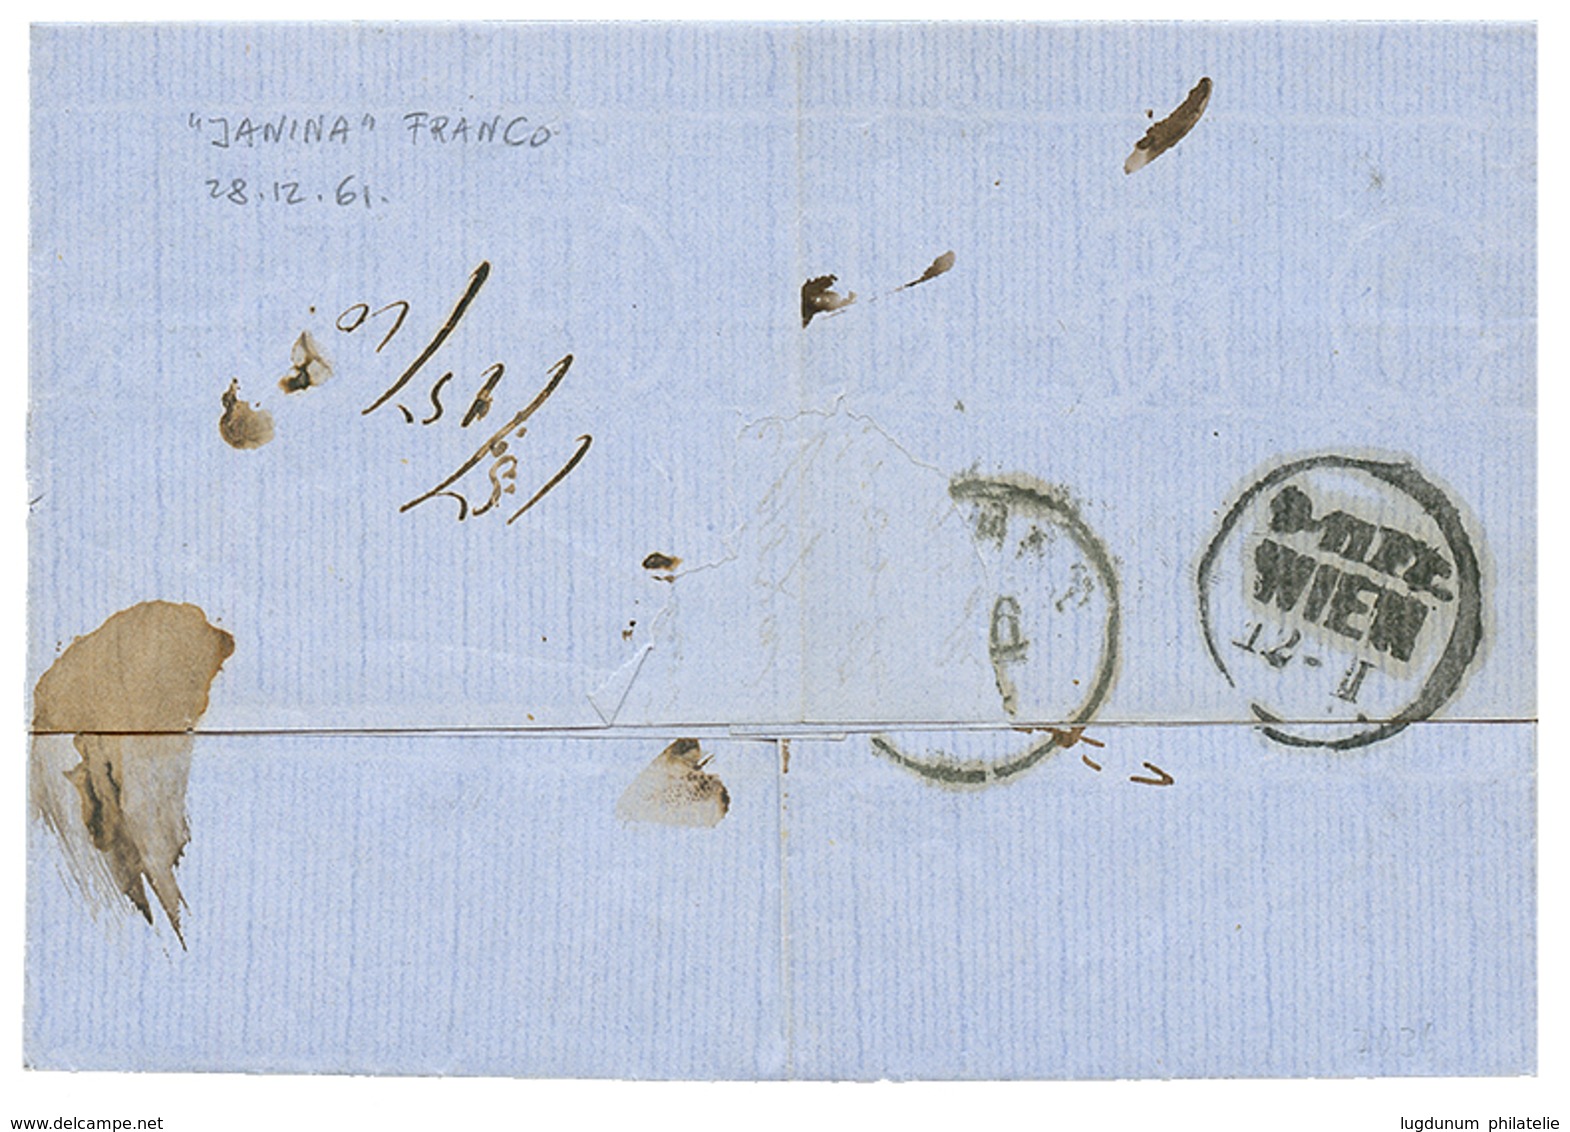 "JANINA" : 1861 JANINA + FRANCO On Entire Letter To VIENNA. Superb. - Oriente Austriaco